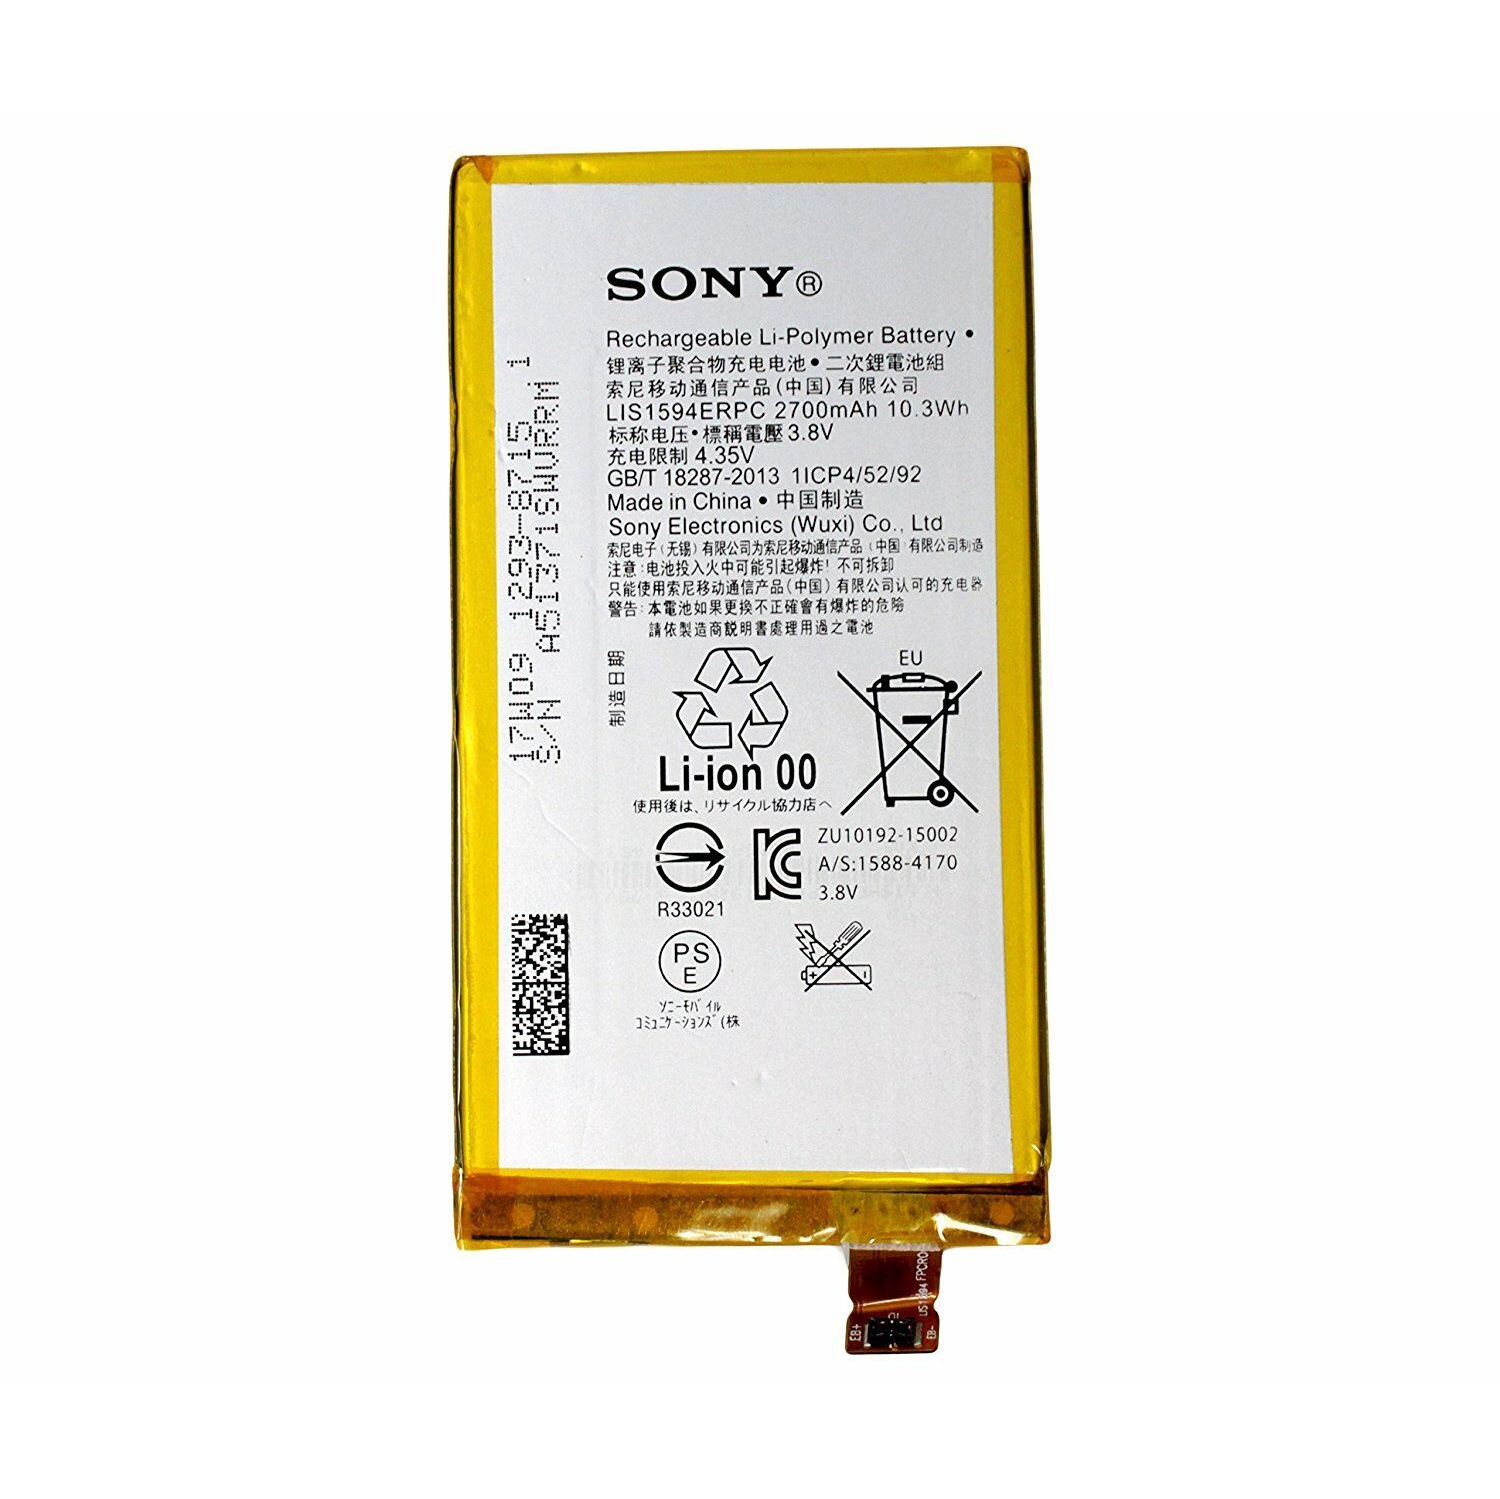 Replacement Battery for Sony Xperia Z5 Mini / Z5 Compact, E5803 E5823 LIS1594ERPC